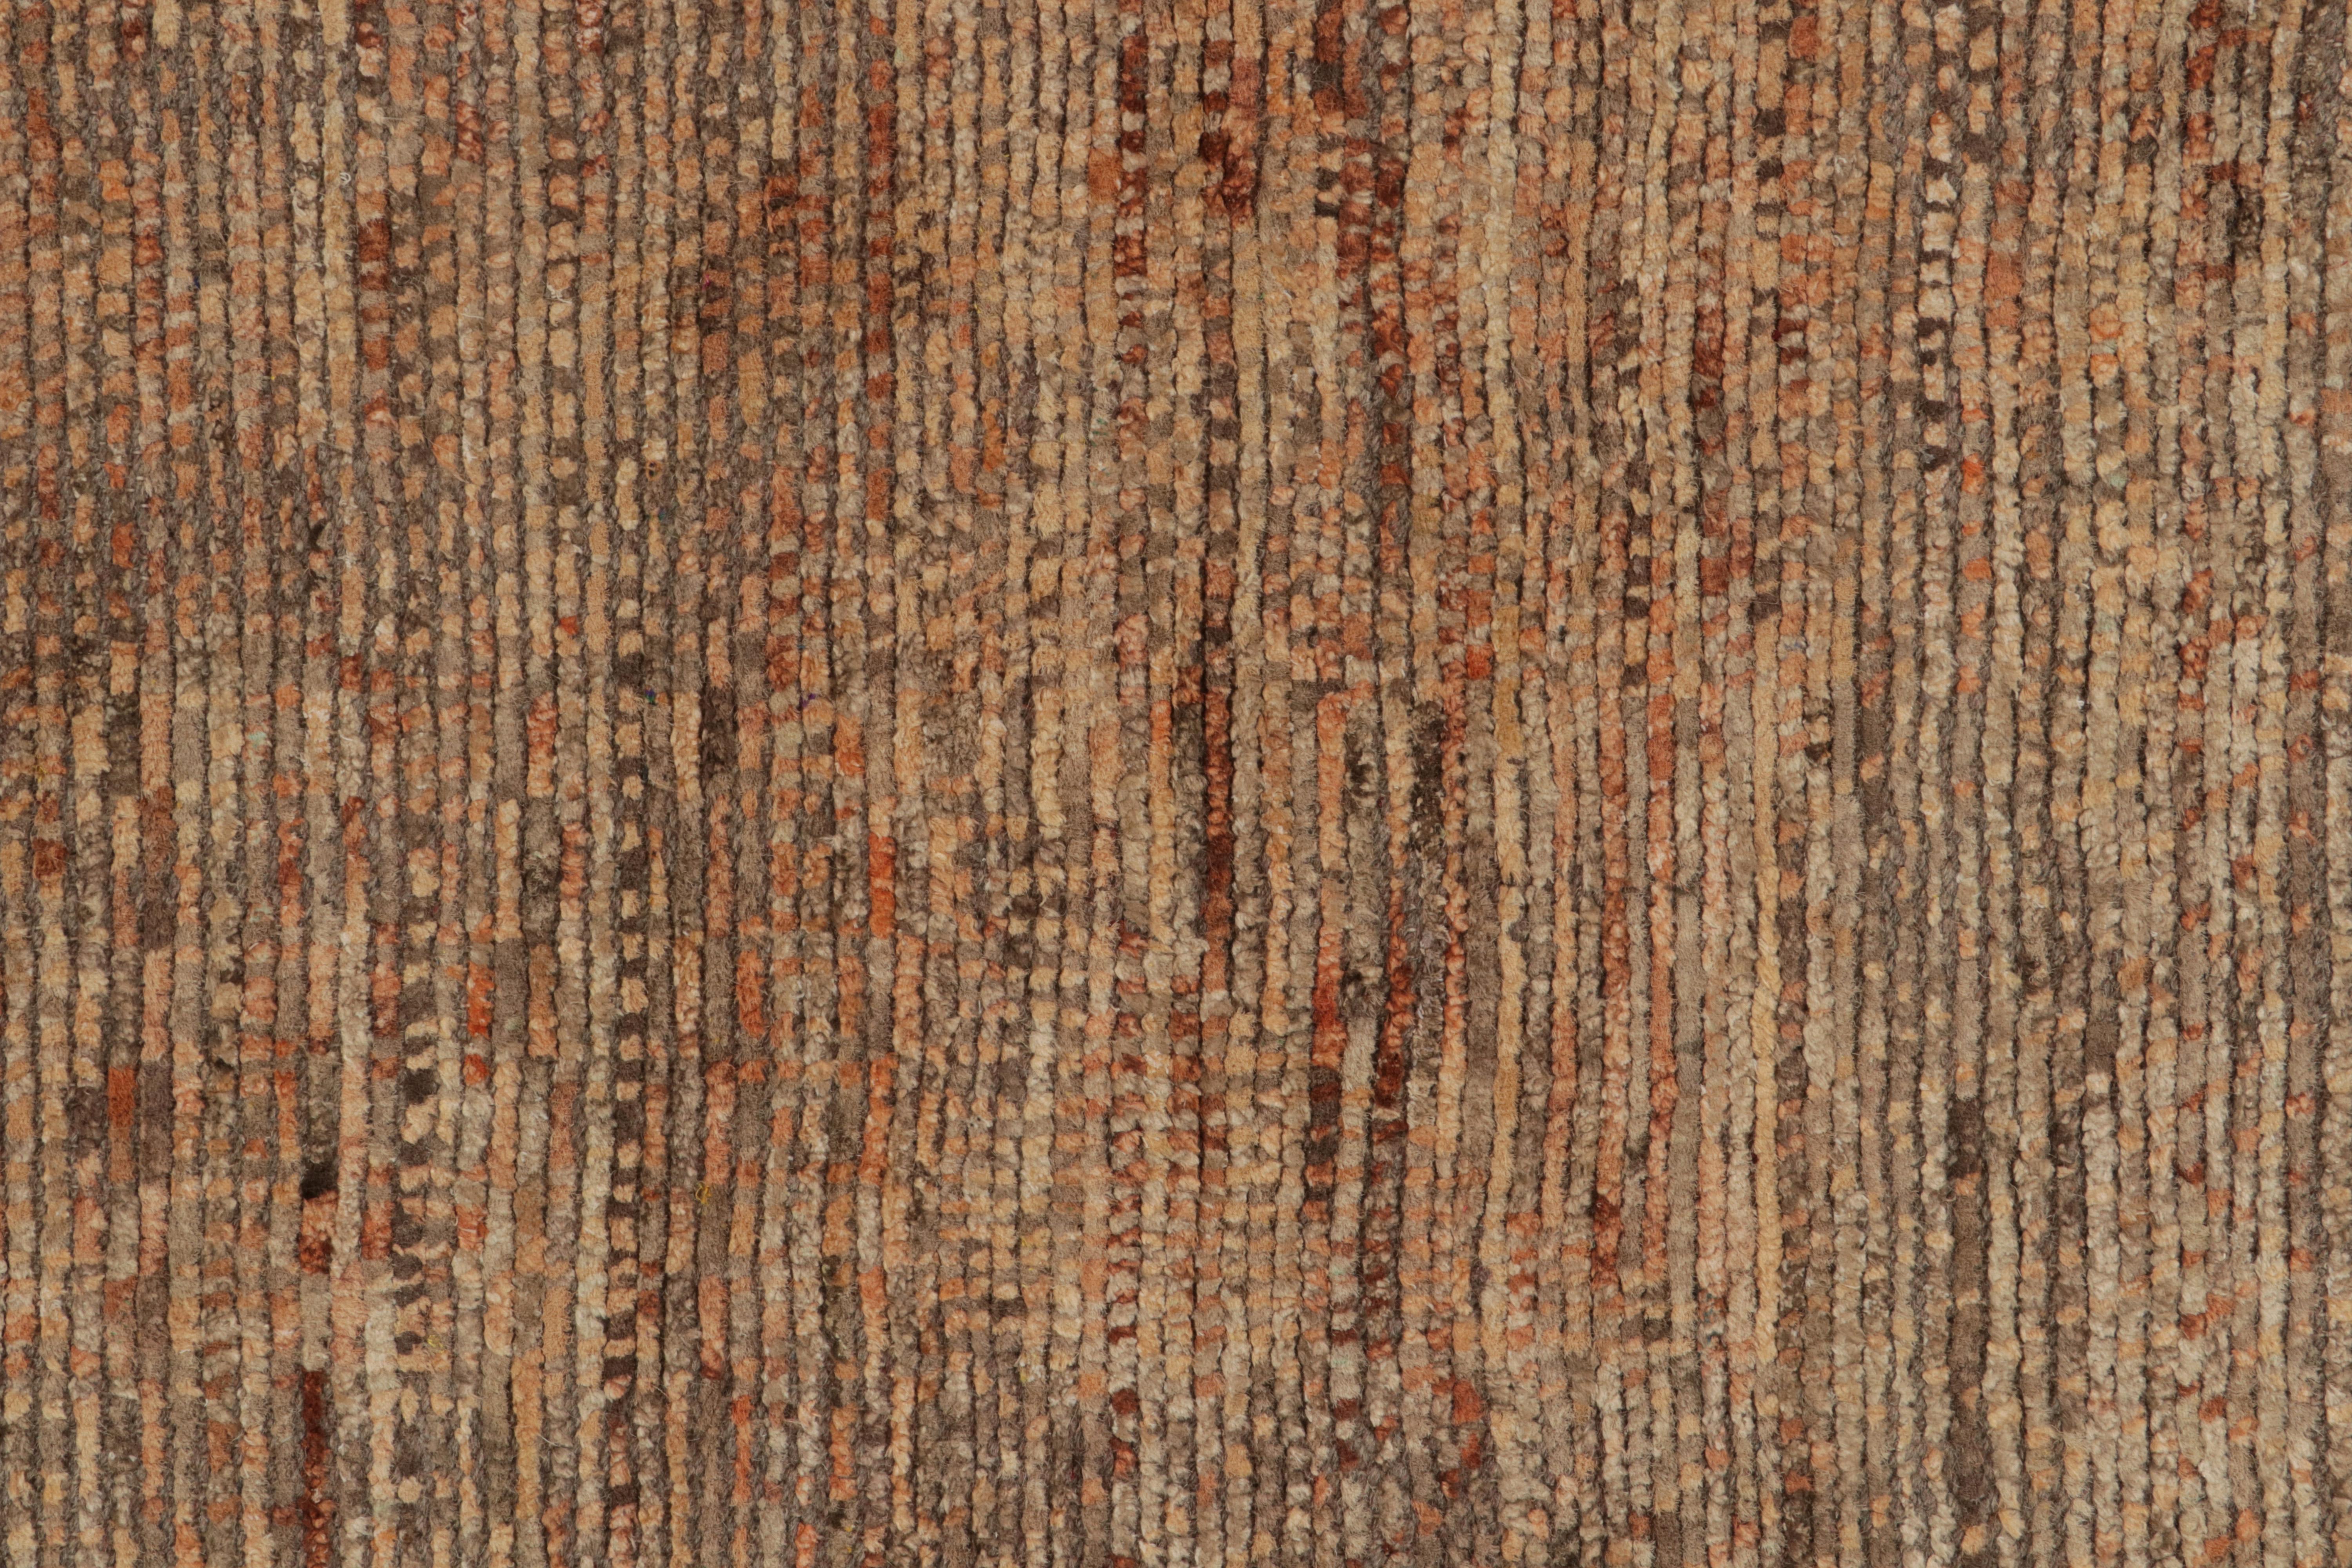 Rug & Kilim’s Modern Textural Rug in Beige-Brown and Orange Striae Patterns